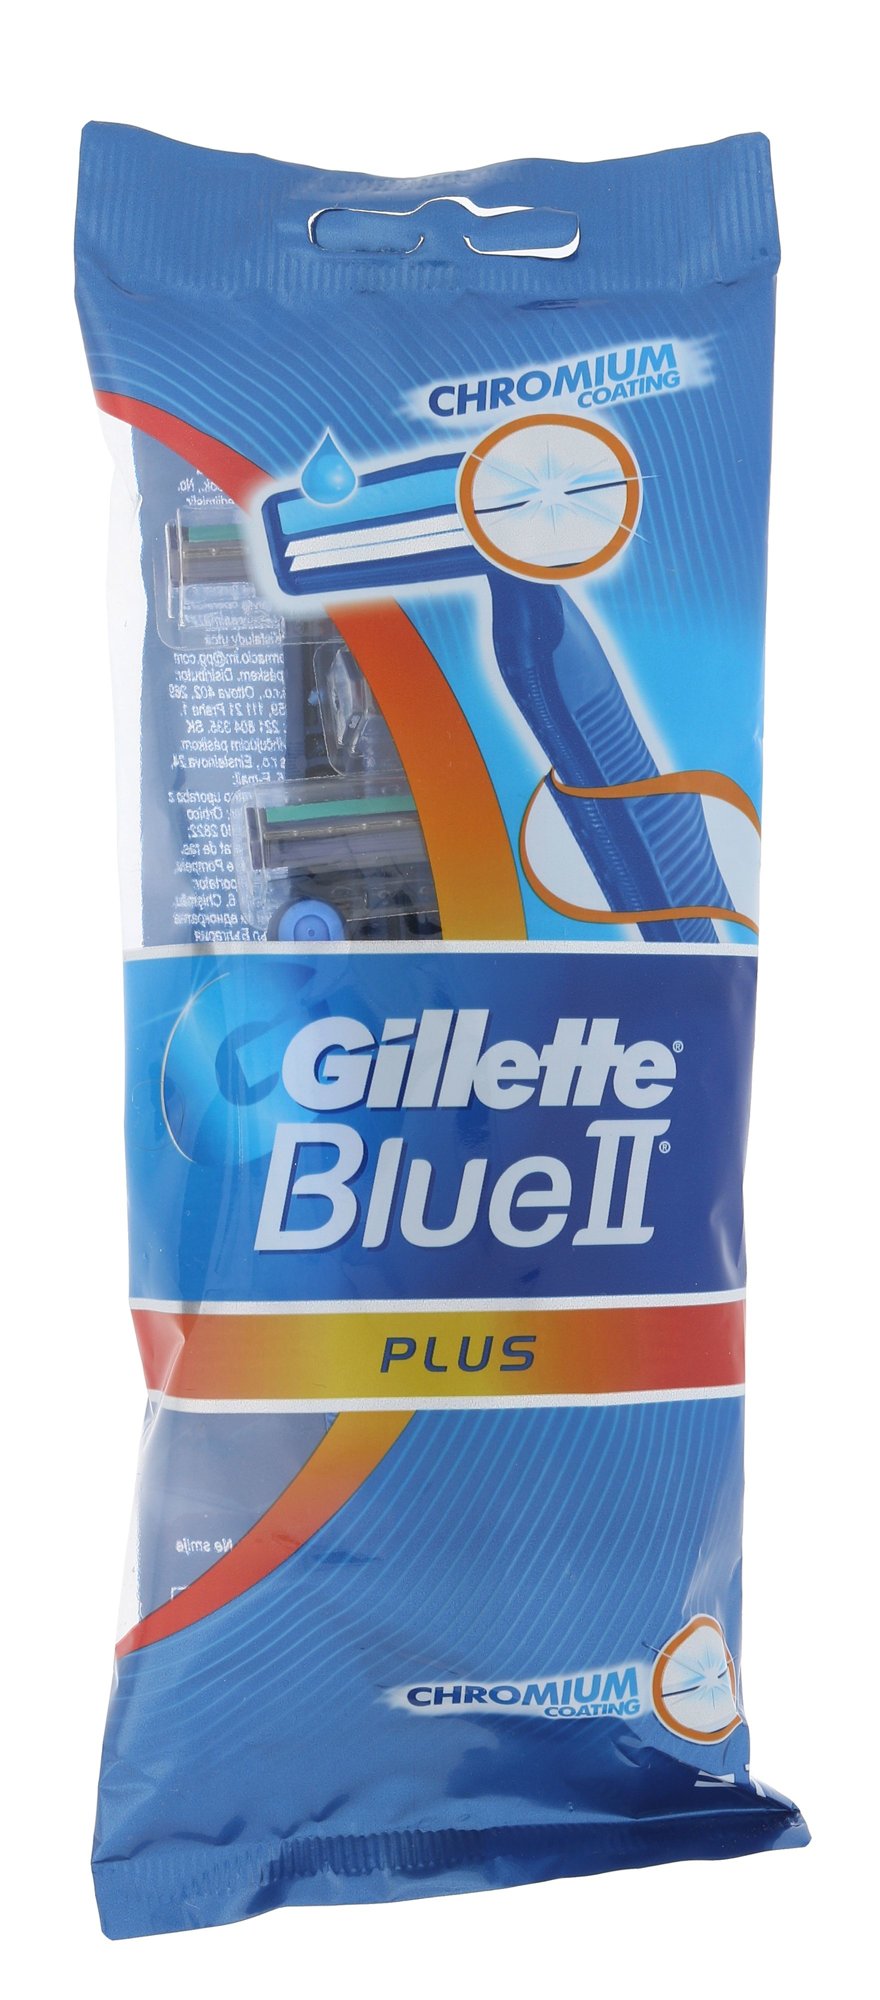 Gillette Blue II skustuvas